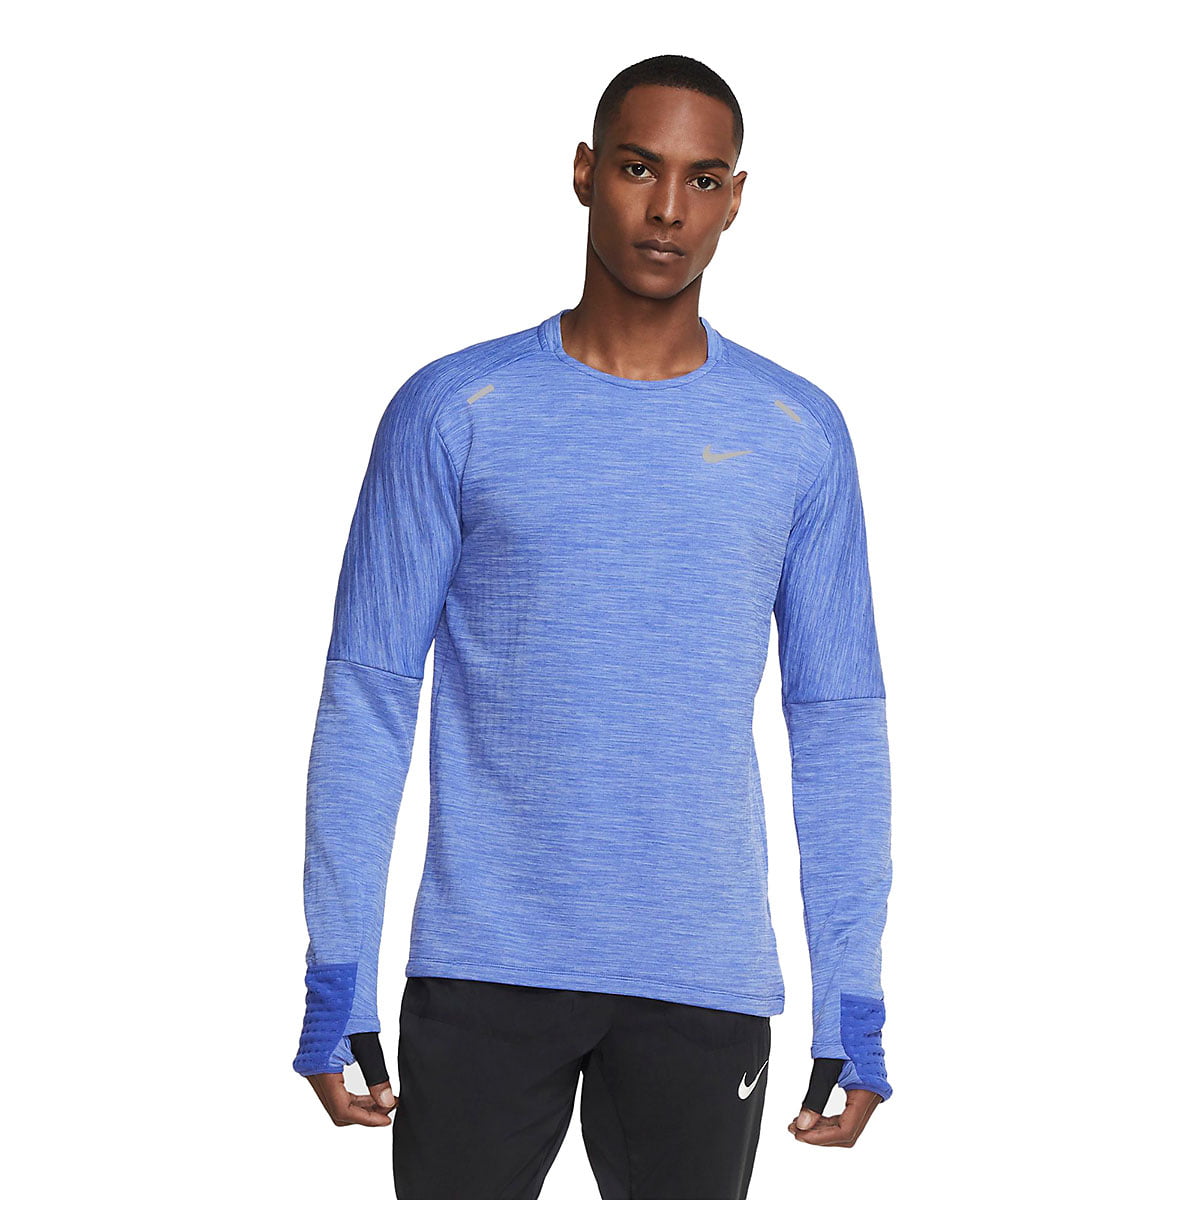 Mangel Kwaadaardig ik zal sterk zijn Nike Men's Sphere Element Crew 3.0 Long Sleeve Running Shirt (Lapis, Large)  - Walmart.com